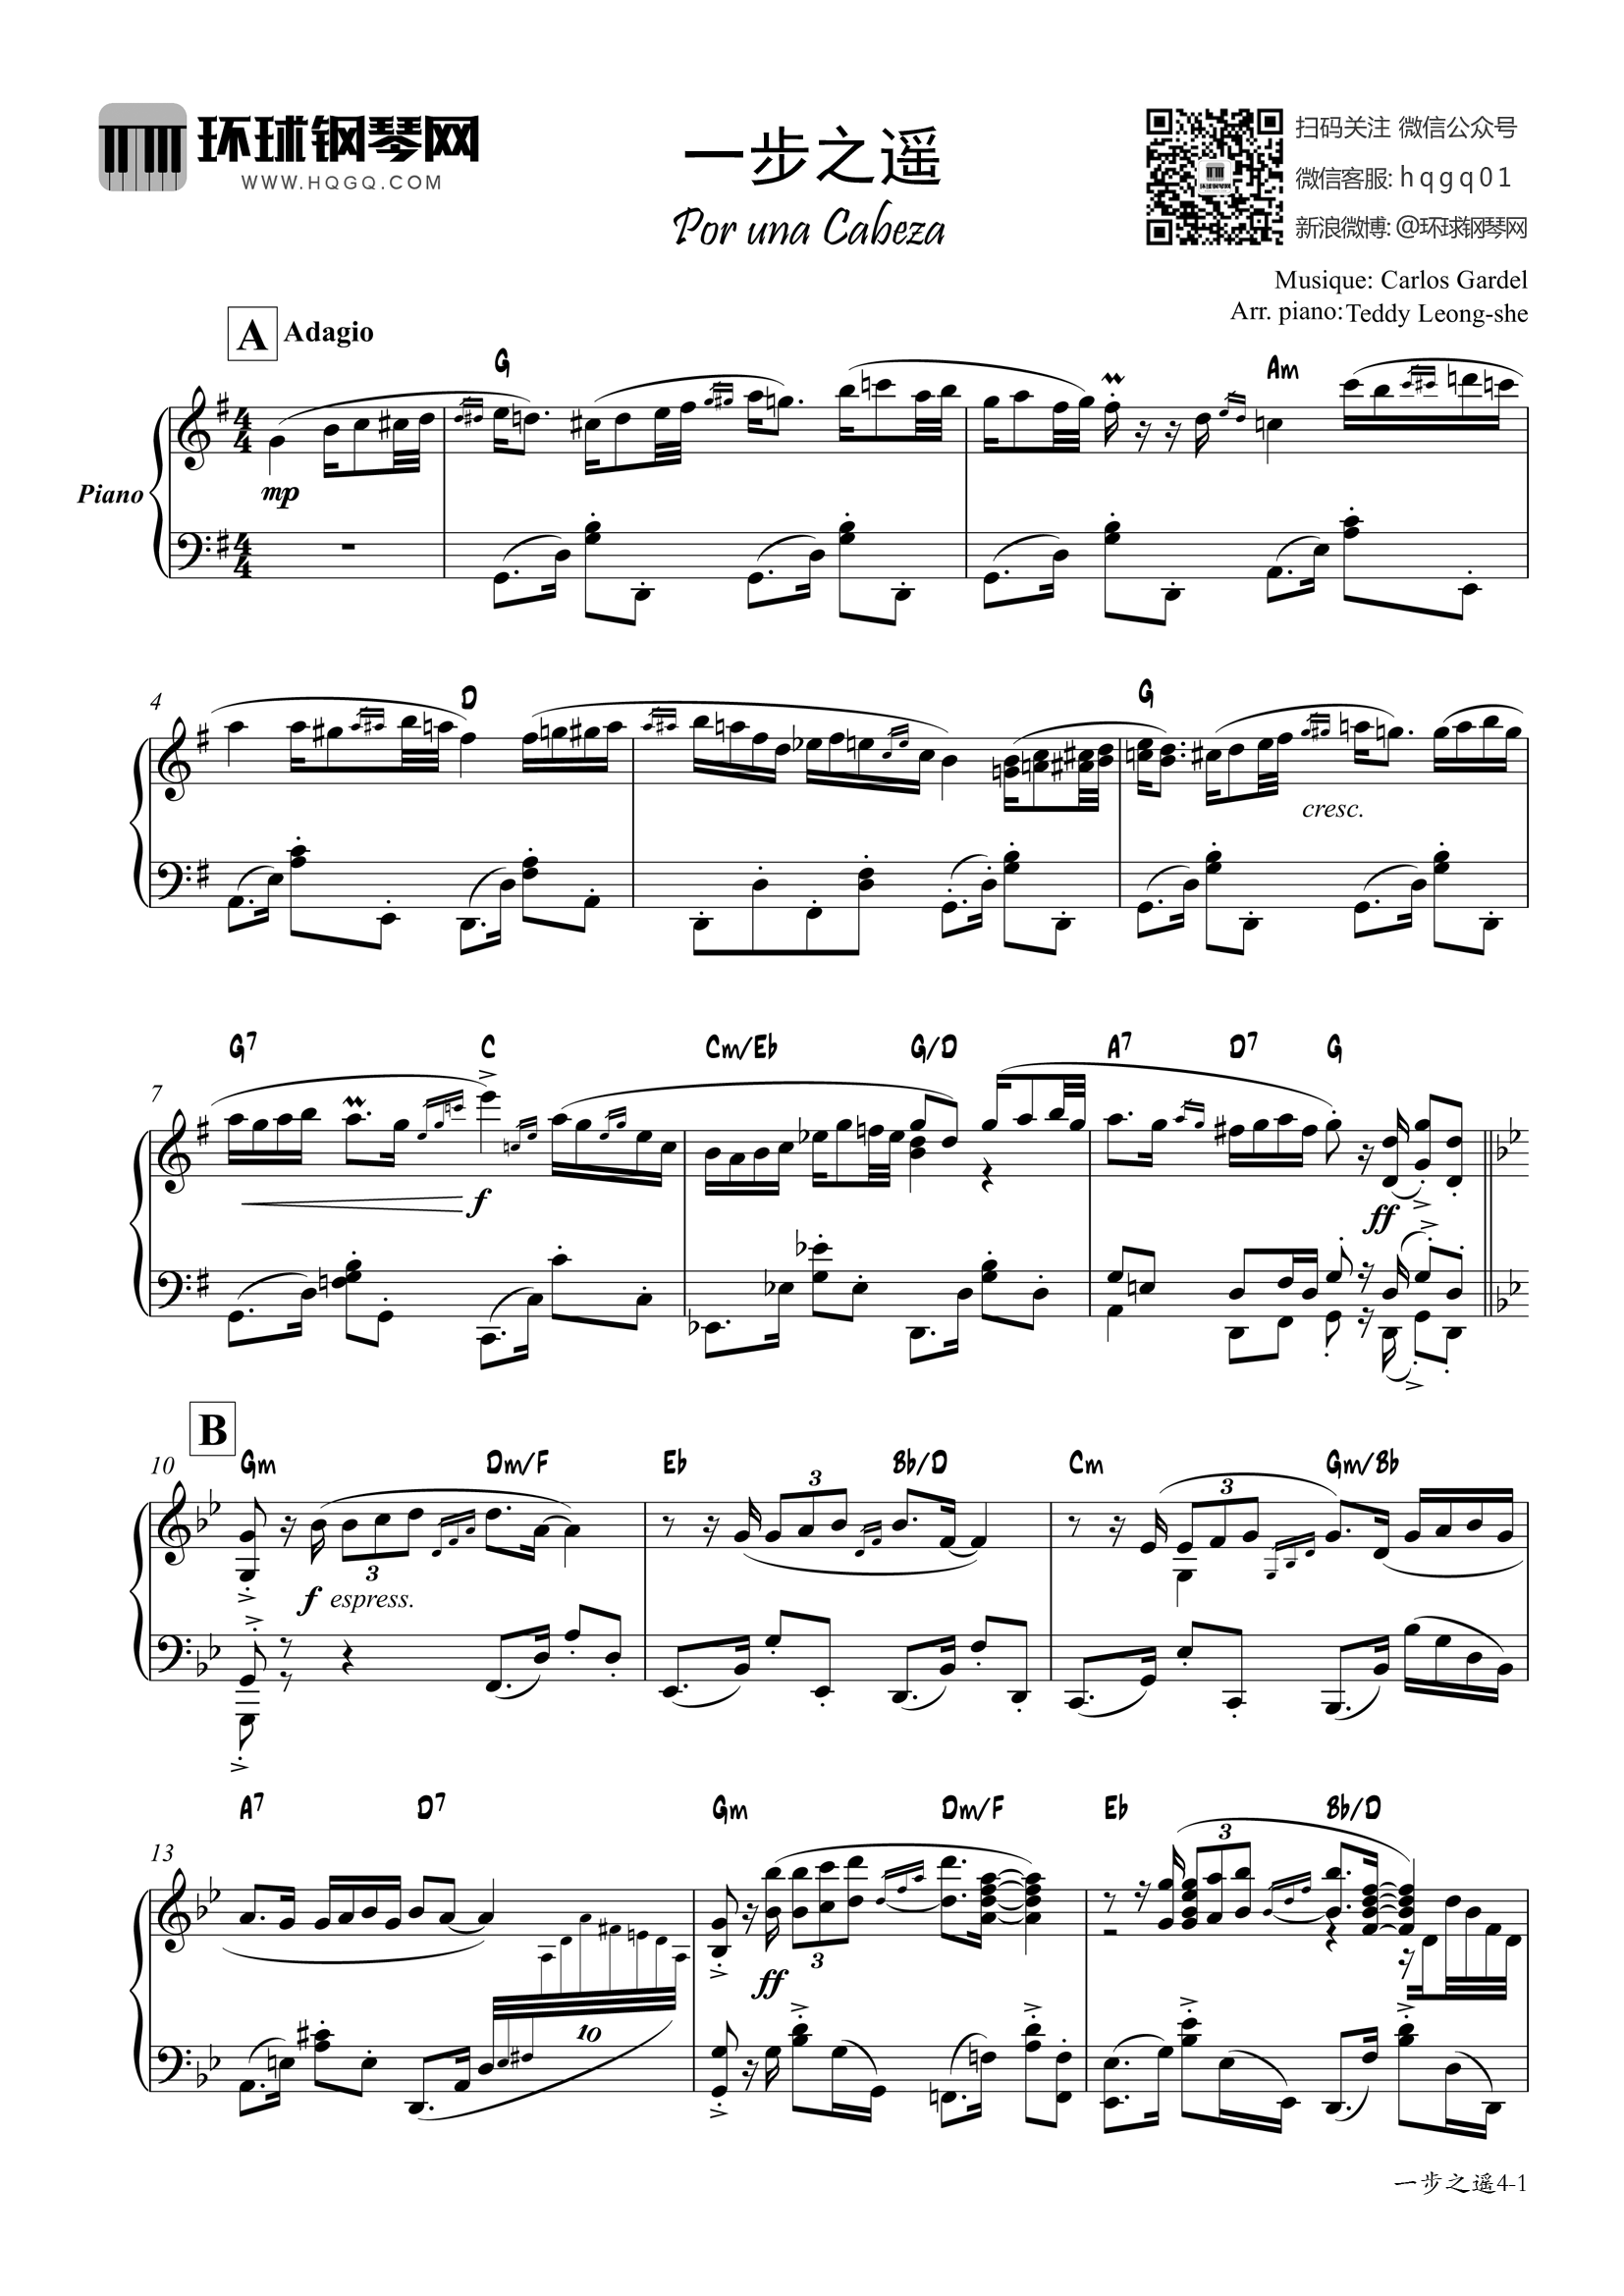 Por Una Cabeza - 一步之遥钢琴谱-Thomas Newman-钢琴都是黑白键-虫虫钢琴